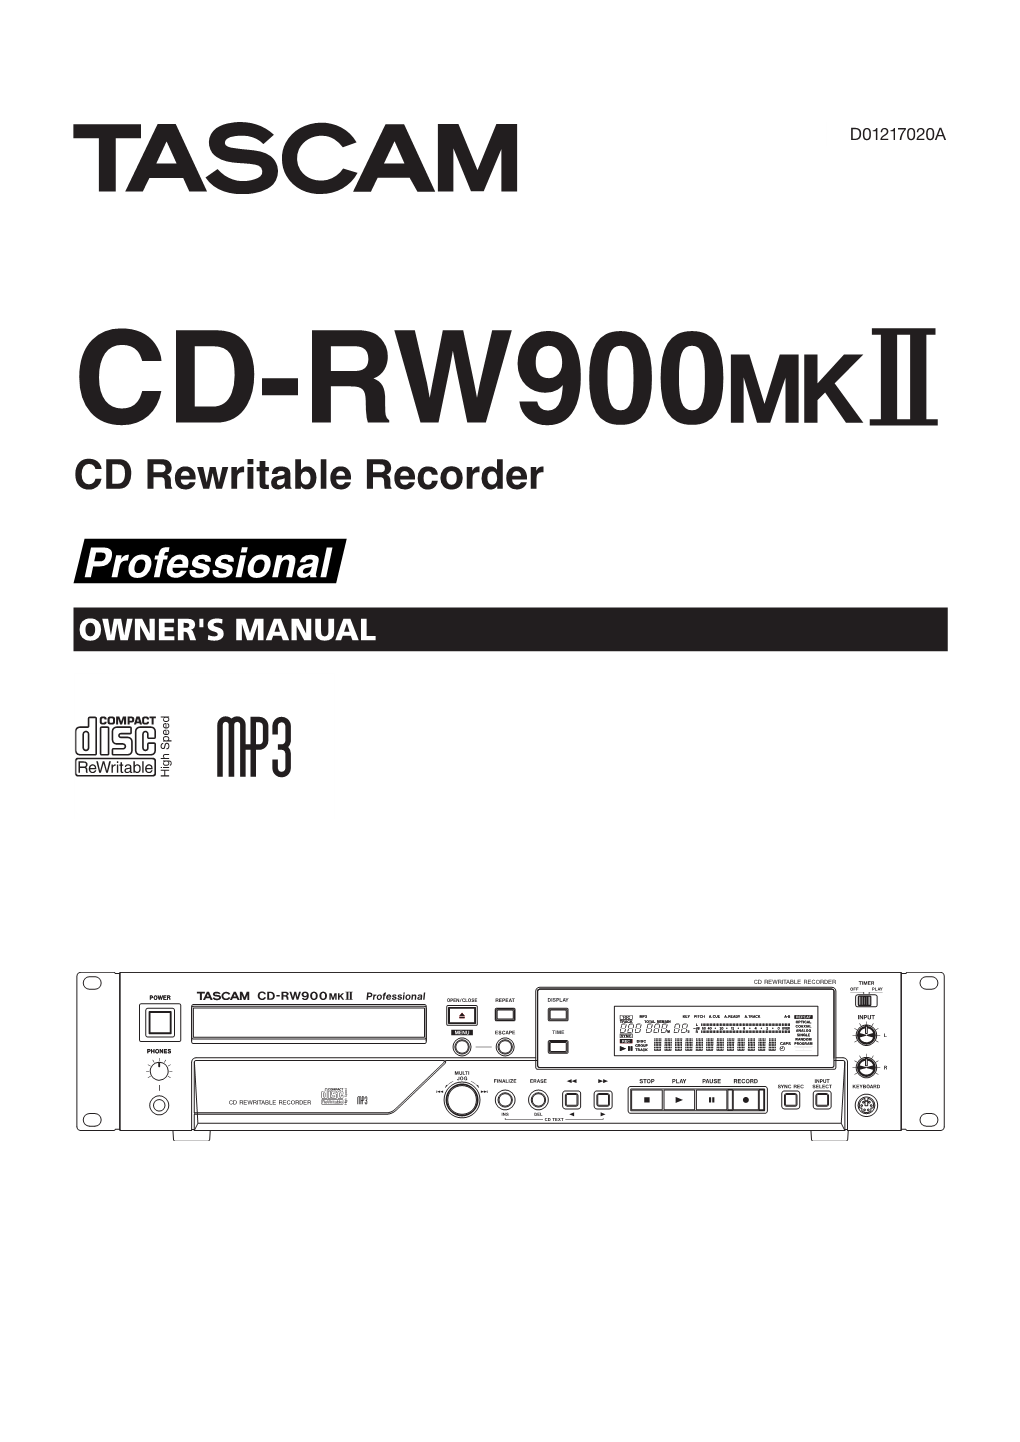 CD-RW900MKII Owner's Manual